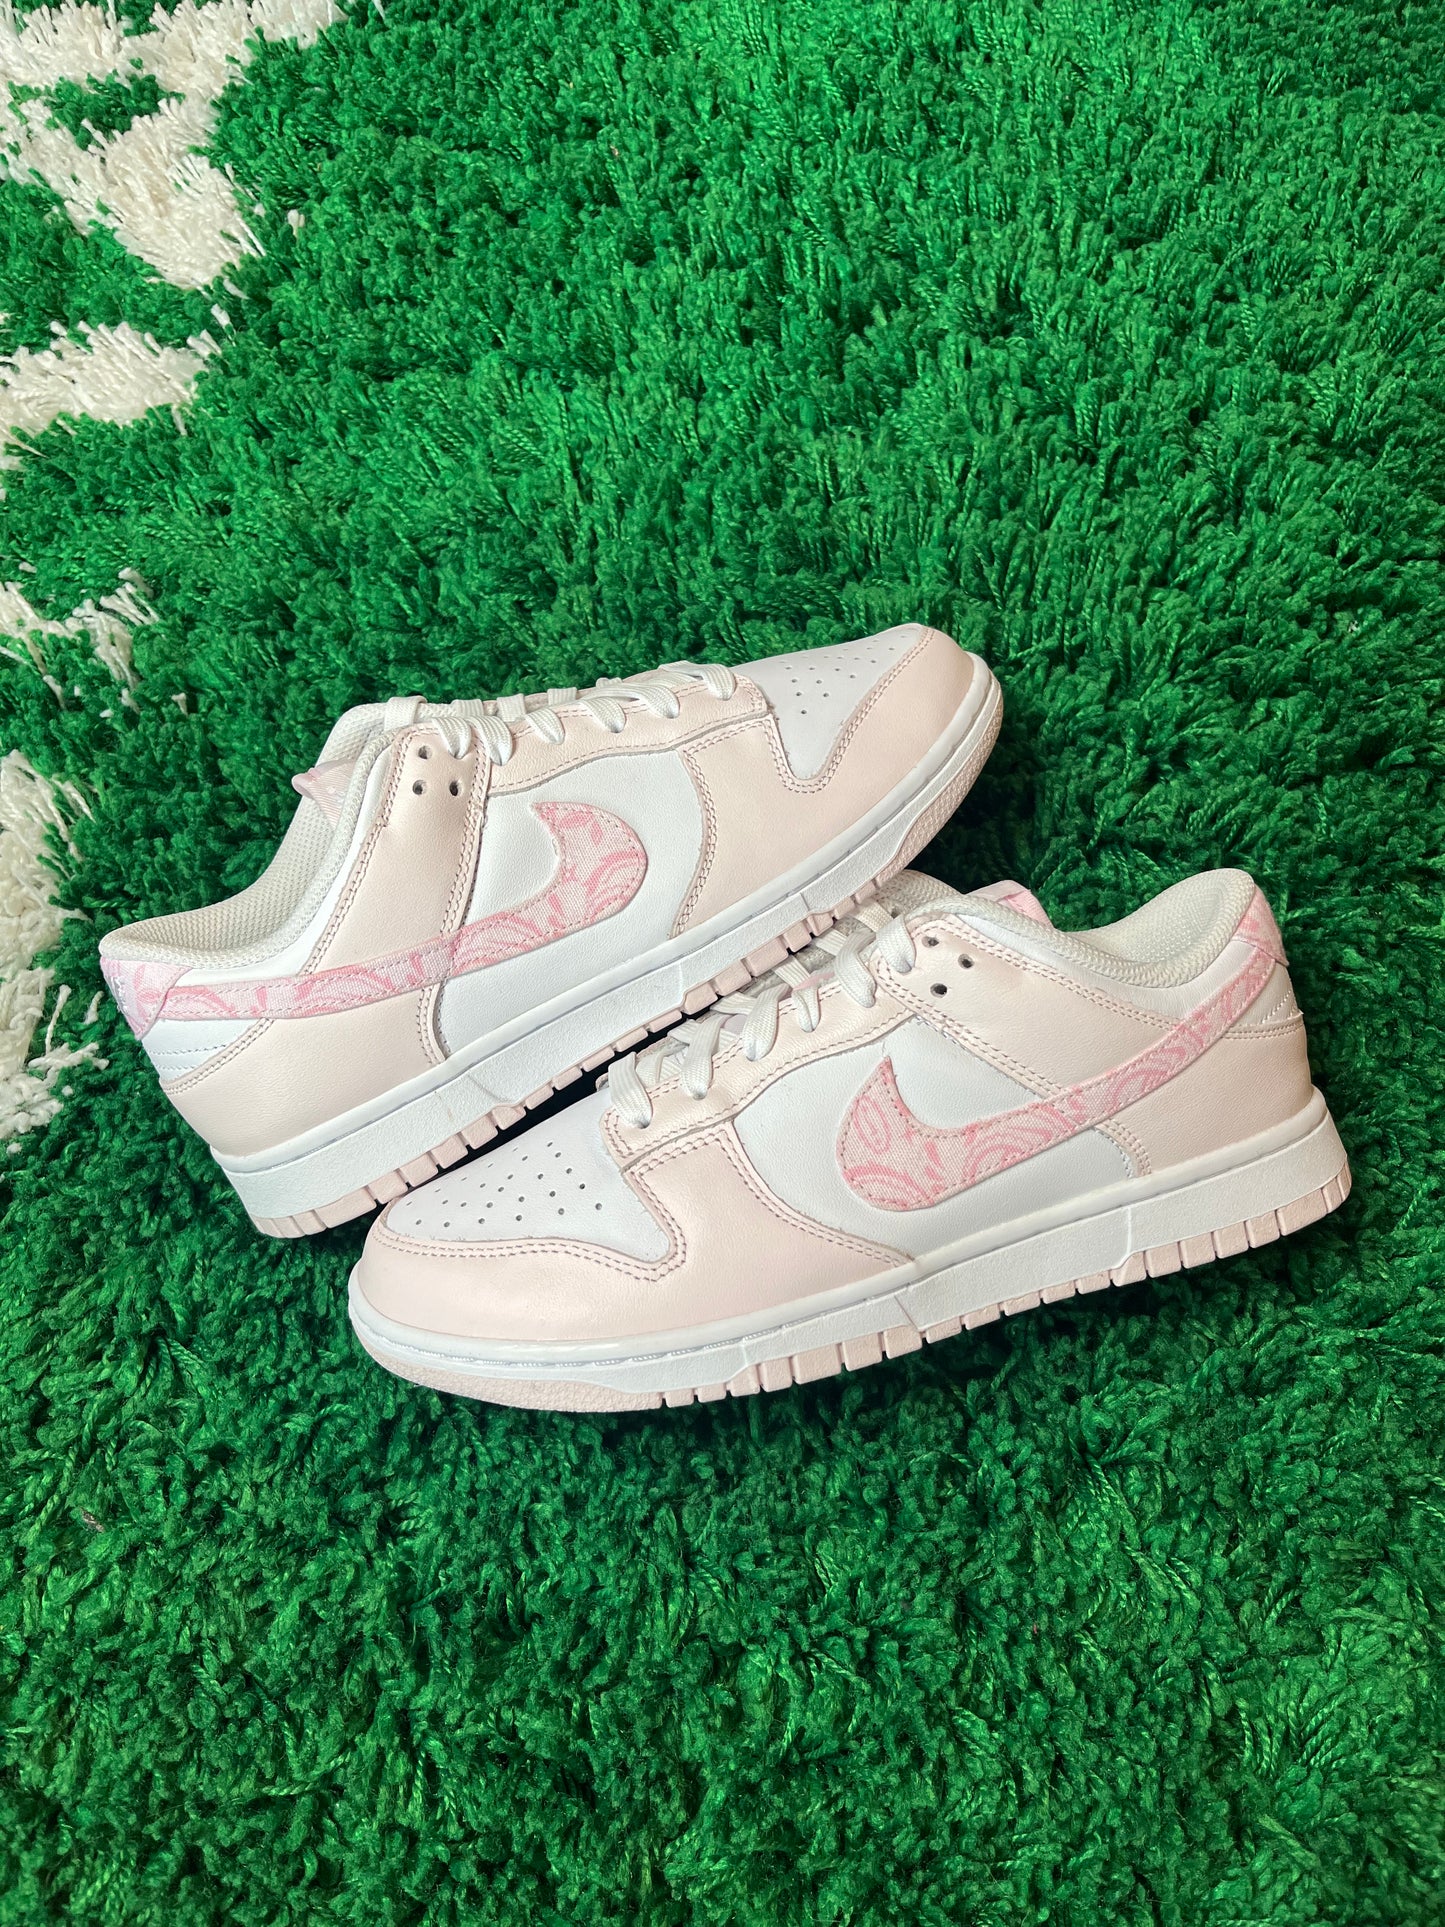 Nike Dunk “Paisley Pink”